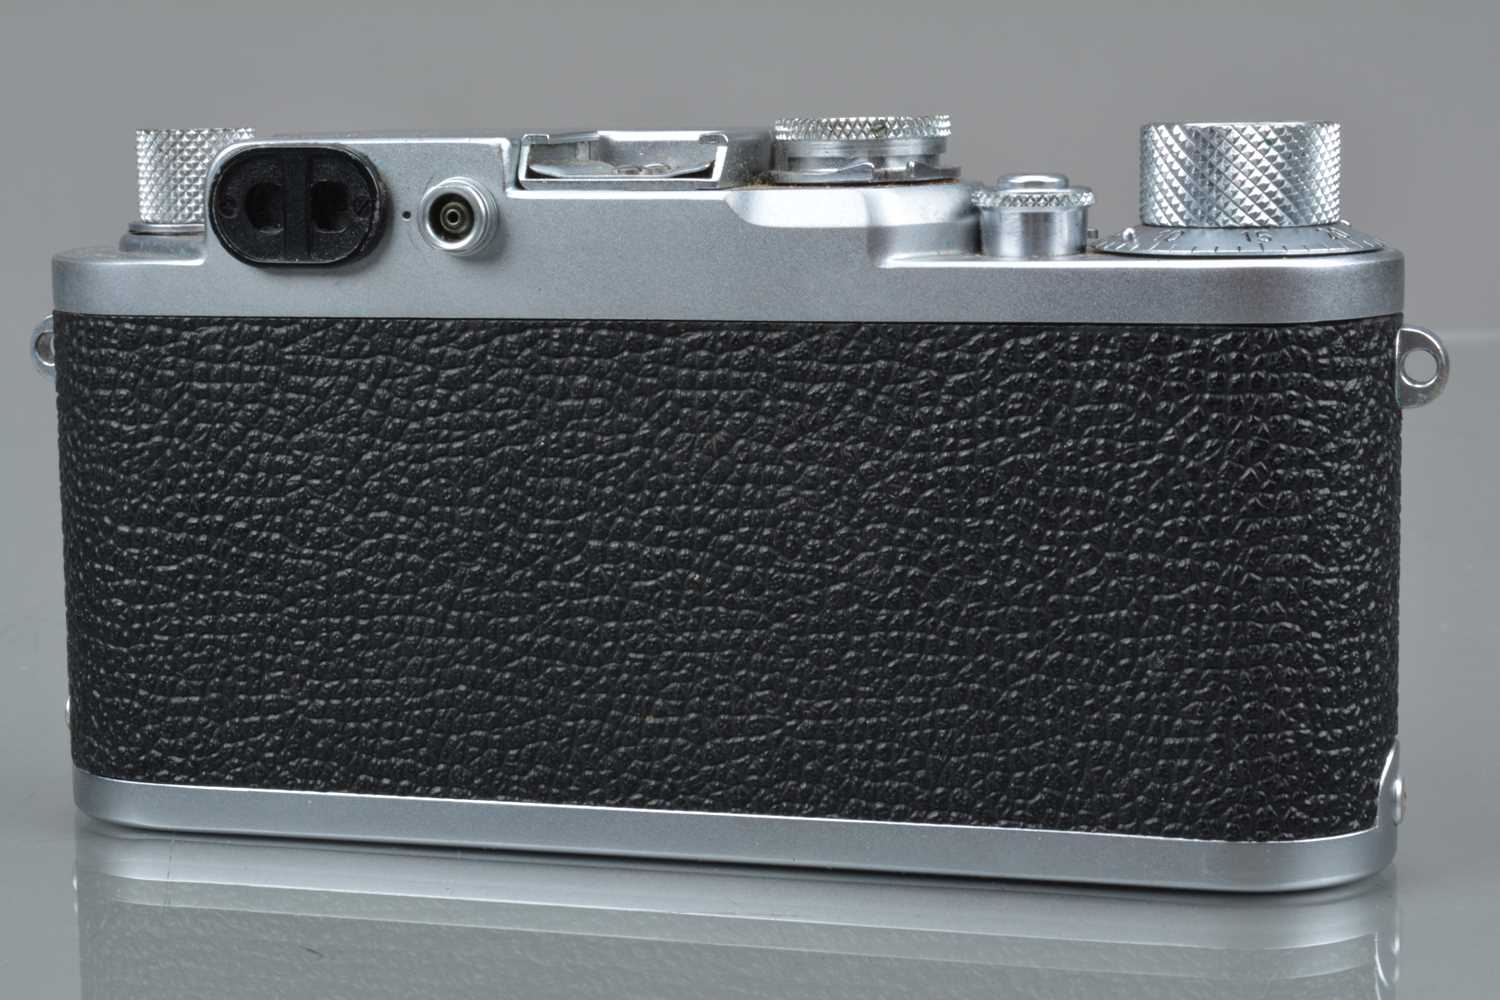 A Leitz Wetzlar Leica IIf Rangefinder Camera Body, - Image 2 of 3